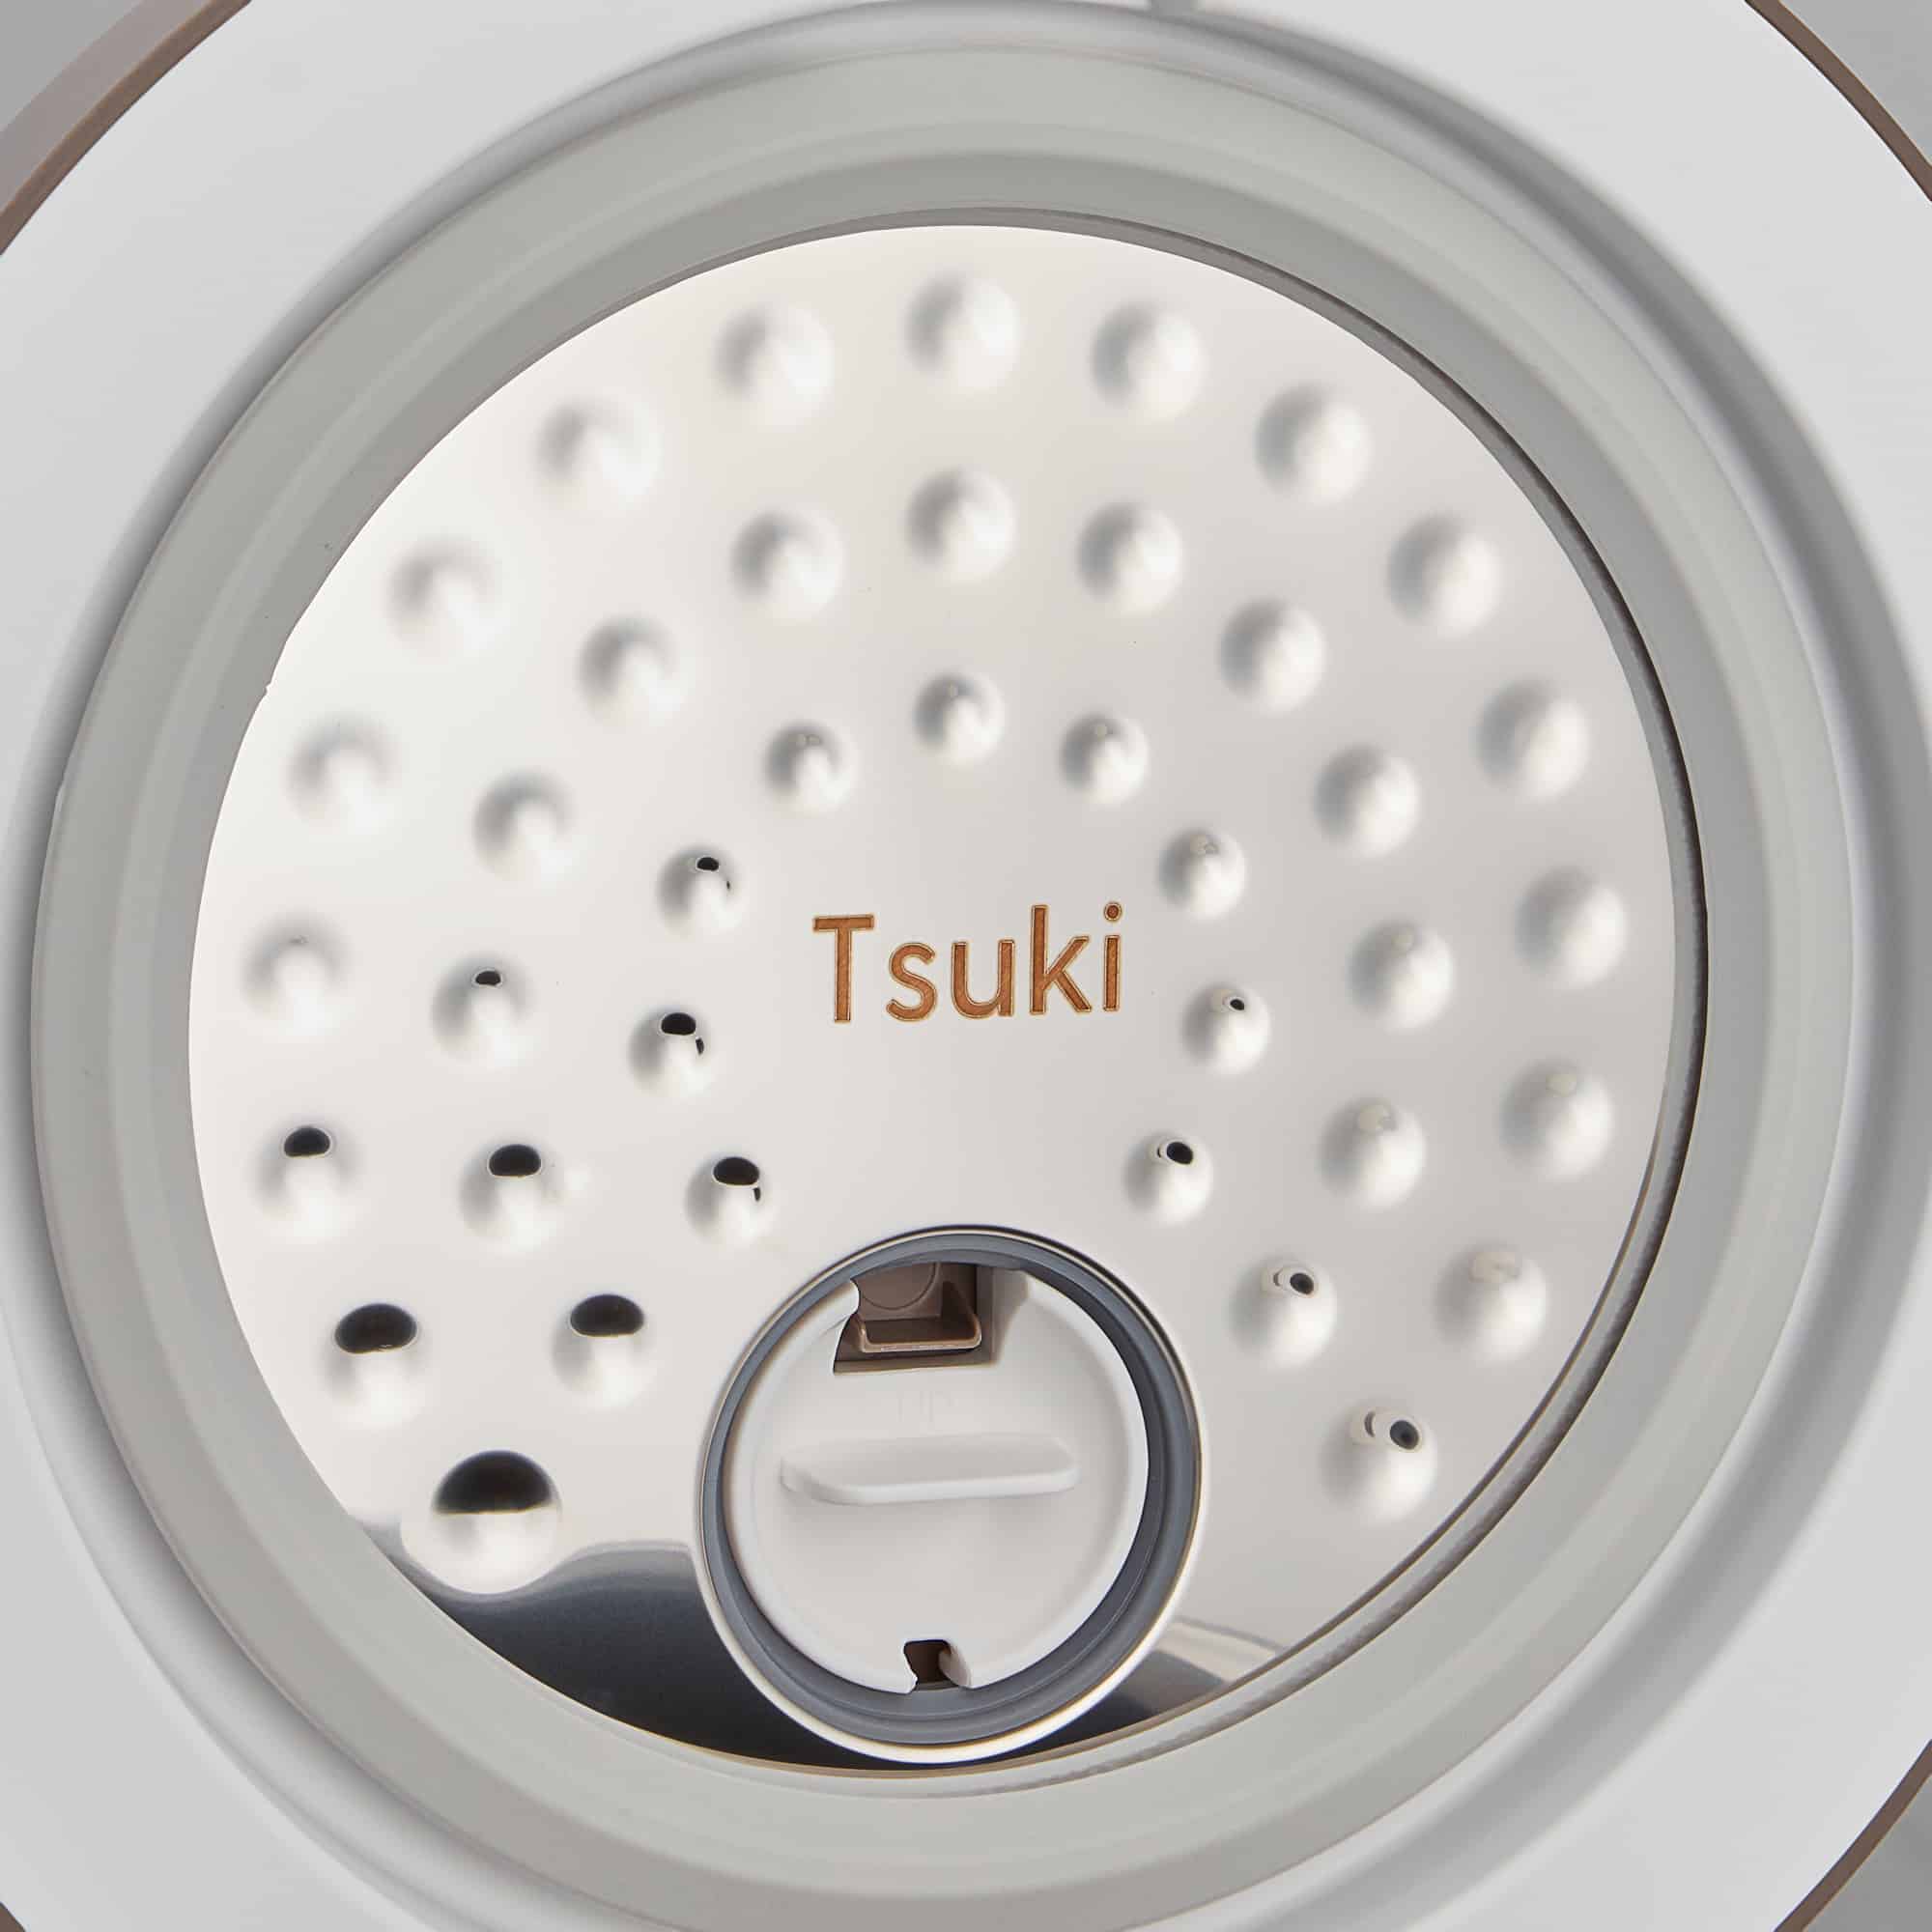 Tsuki Mini Advanced Fuzzy Logic Ceramic Rice Cooker - Yum Asia EU 